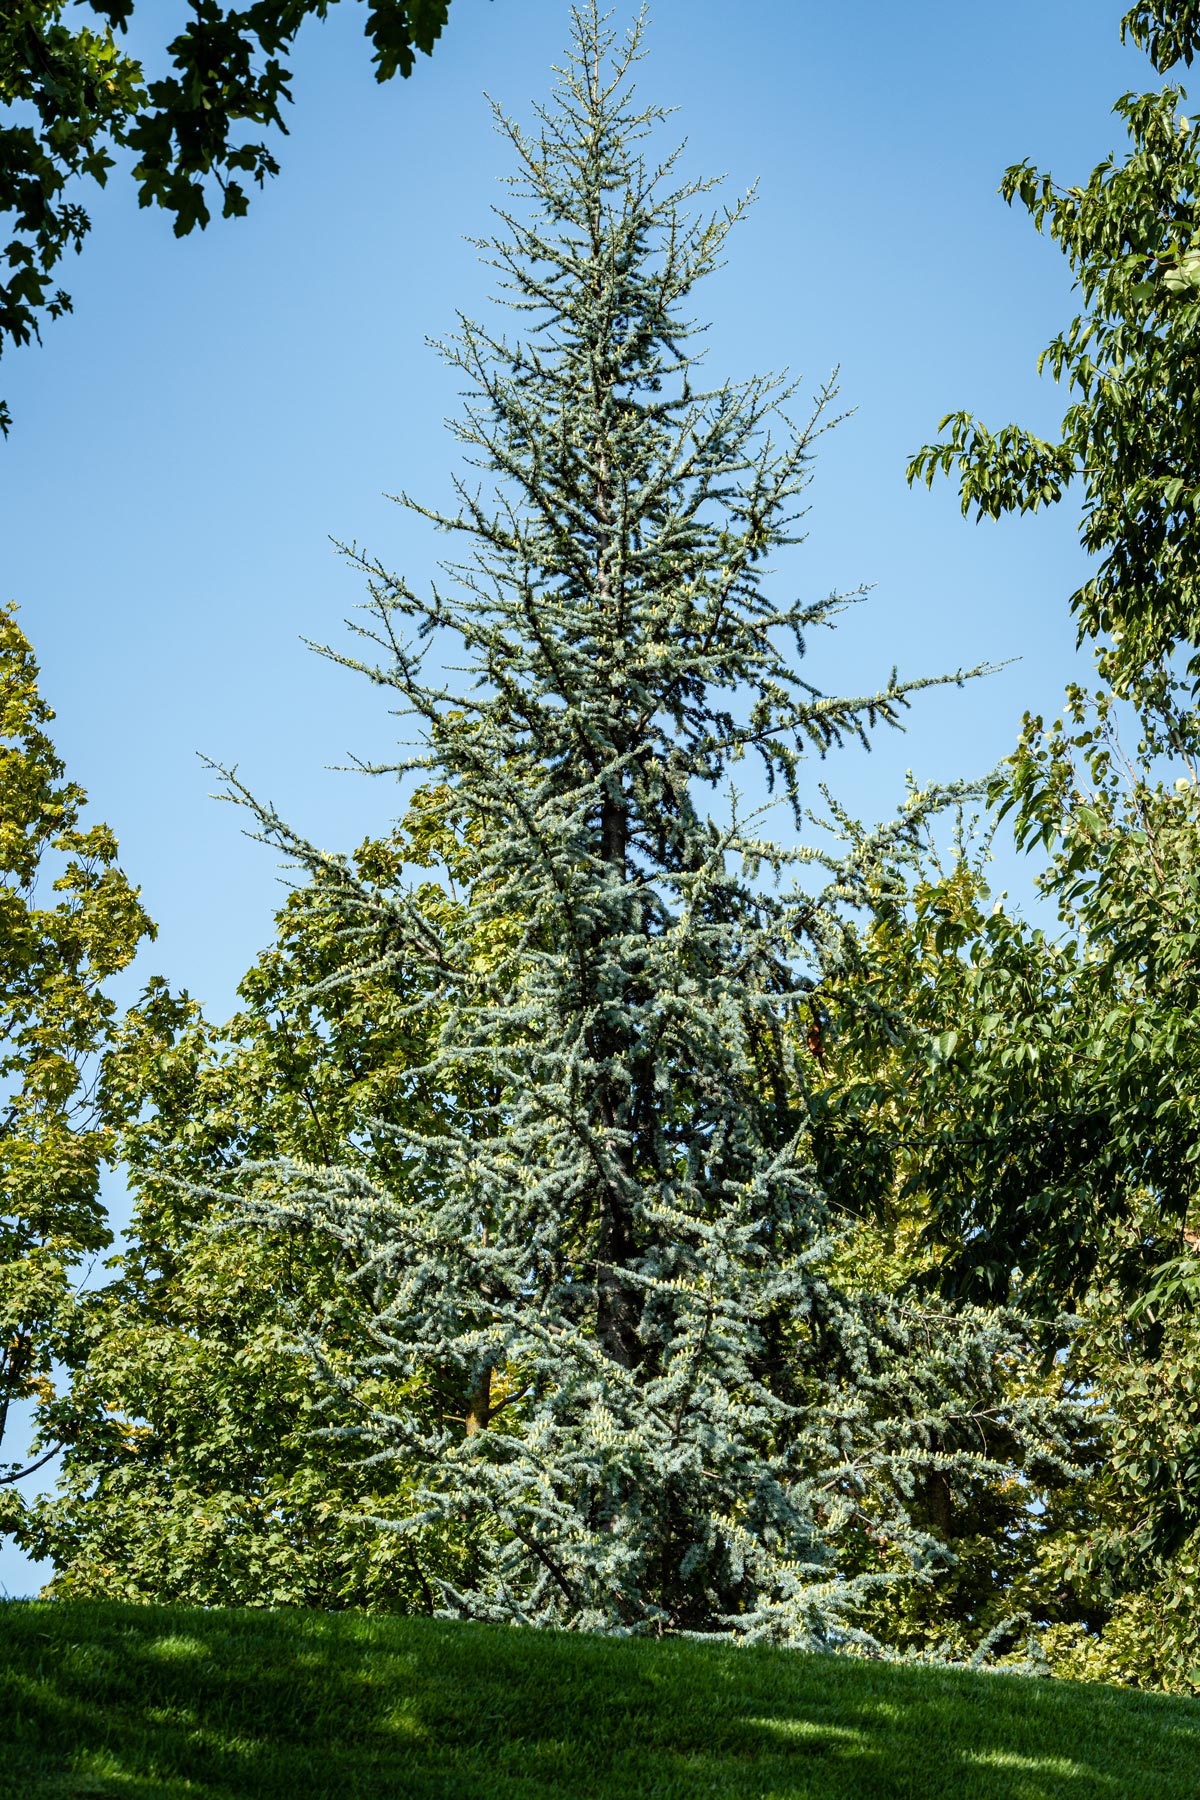 blue atlas cedar tree for sale - buying & growing guide - trees